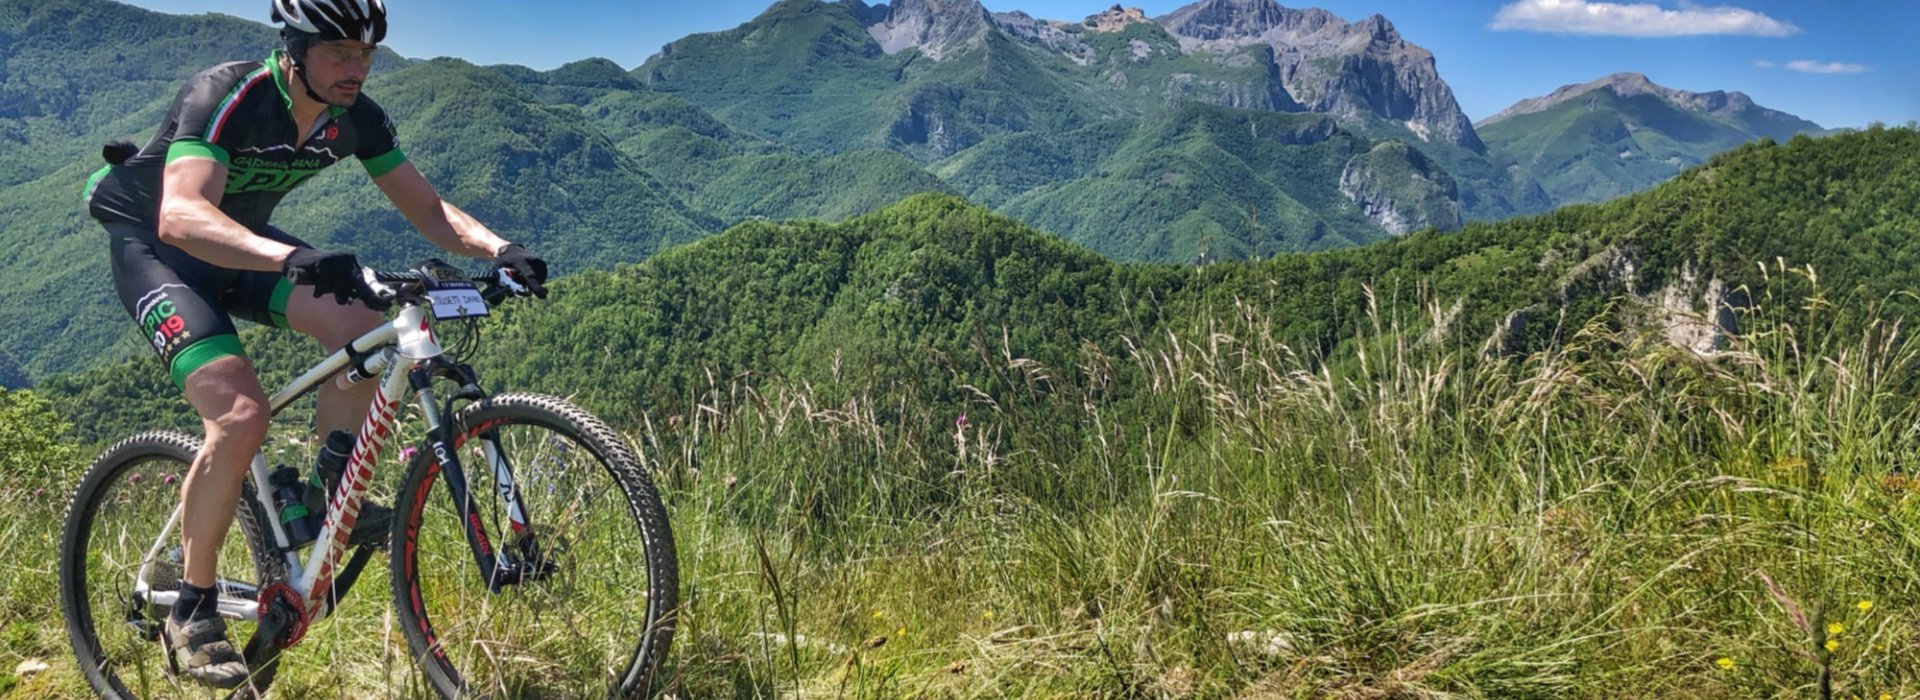 Cyclethe Apennine Tuscany: e-MTB touring